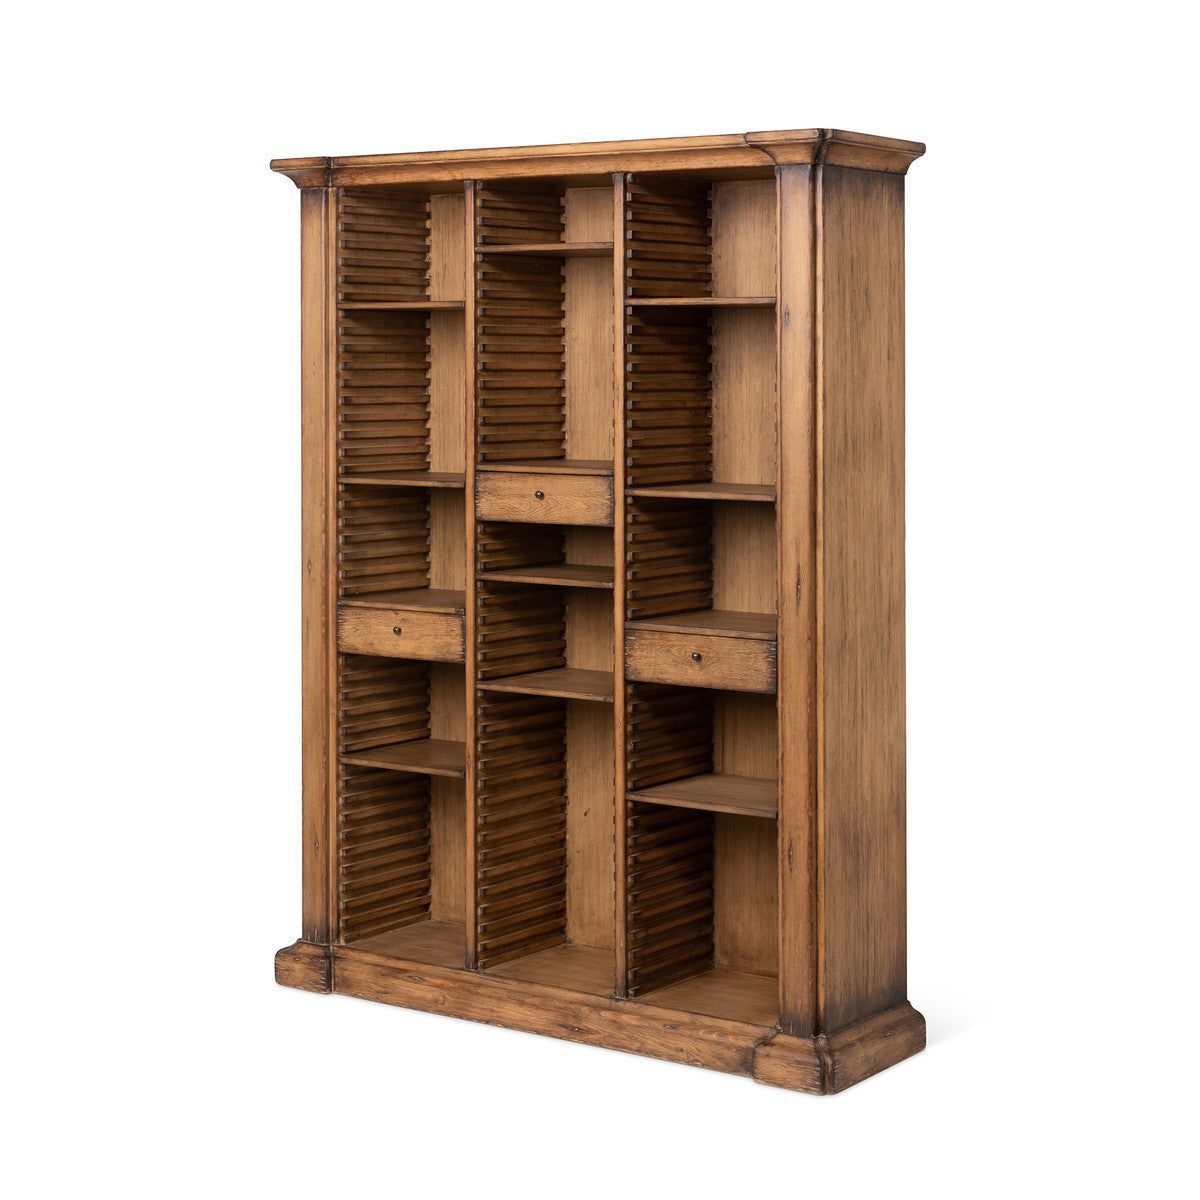 Bradley Adjustable Shelf Wooden Bookcase by Park Hill